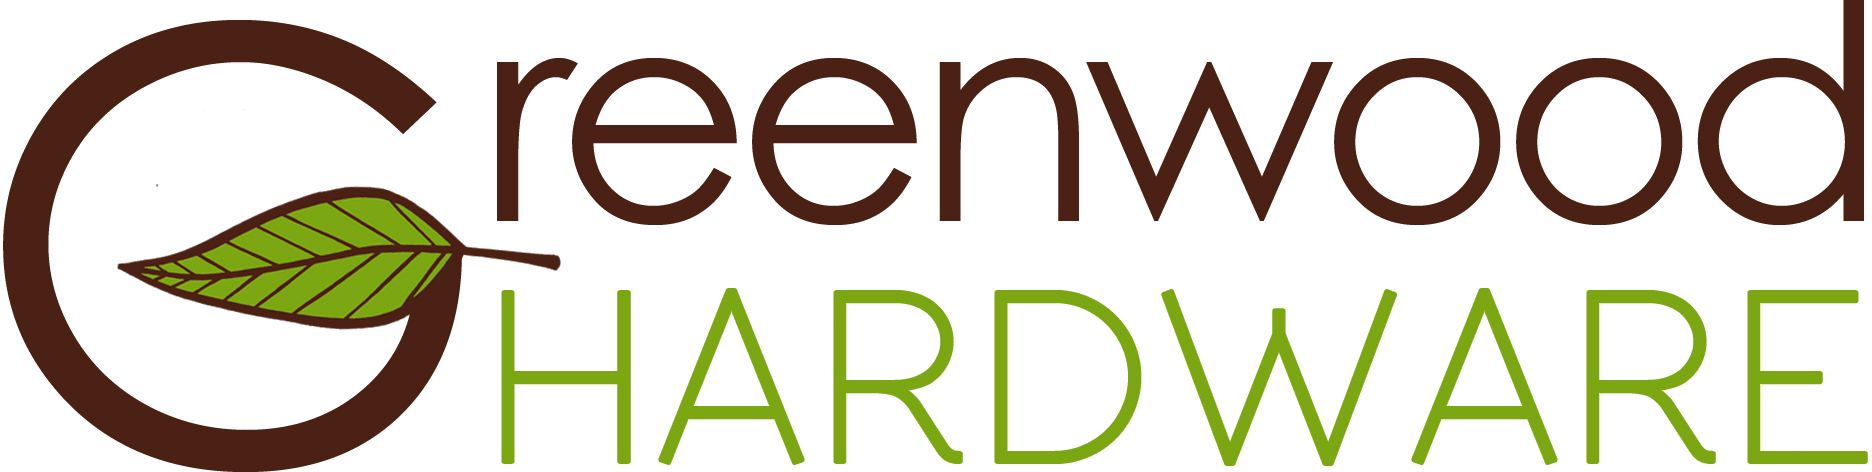 Cropped Greenwood Hardware LogoX 8 